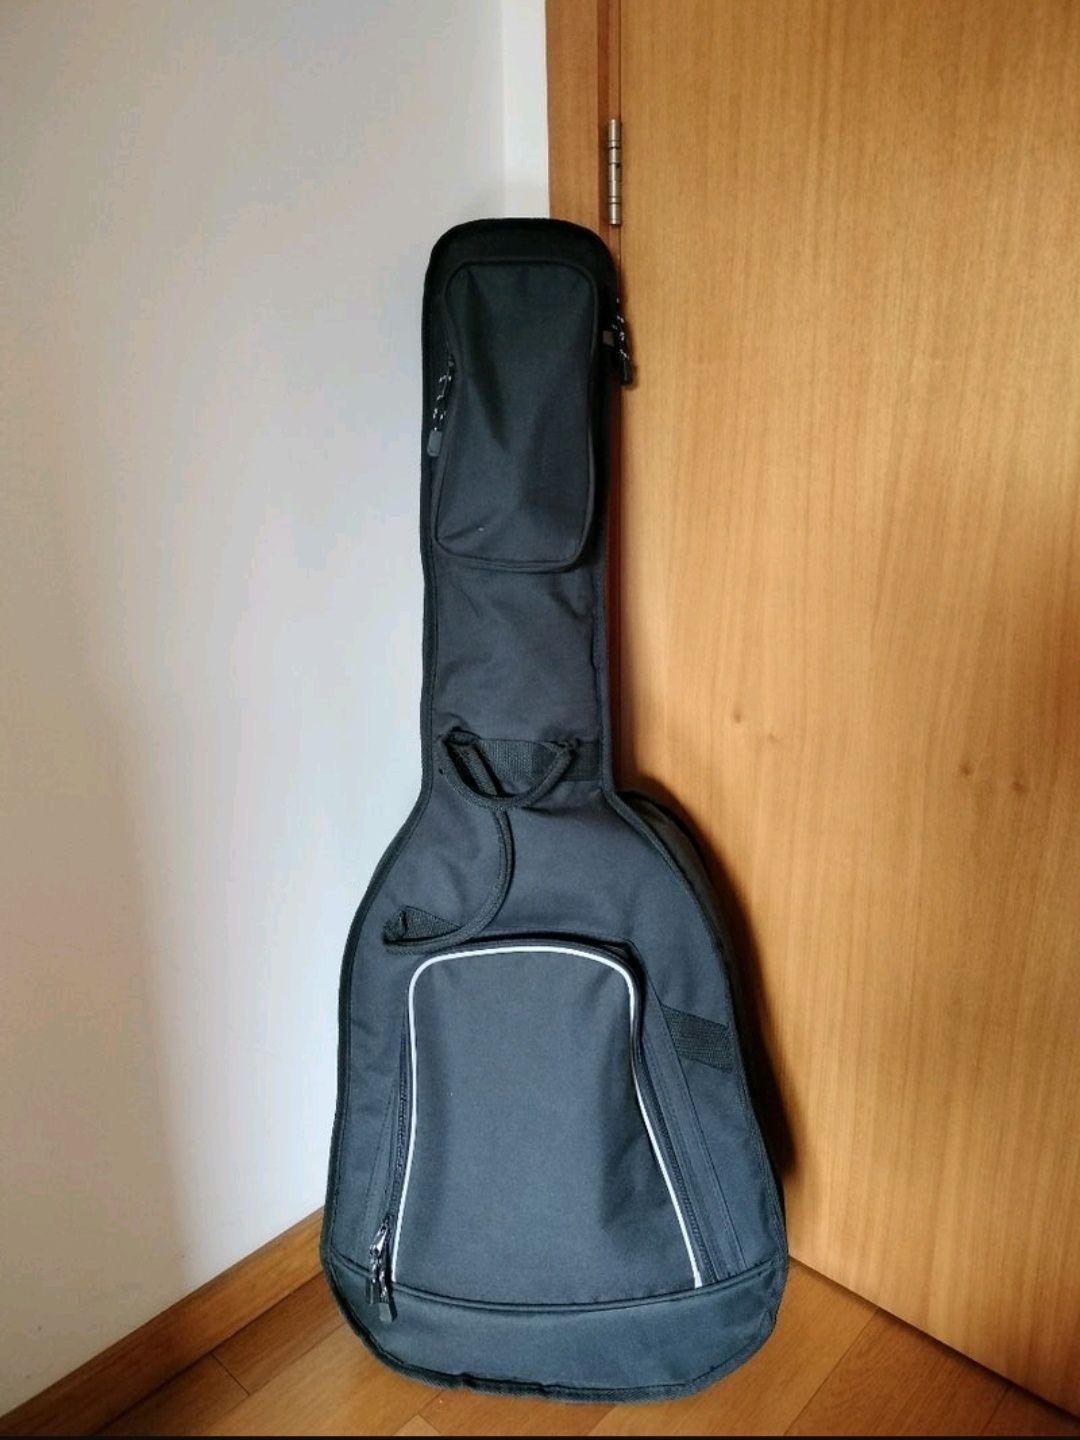 Guitarra Clássica Guiannini GN-15N